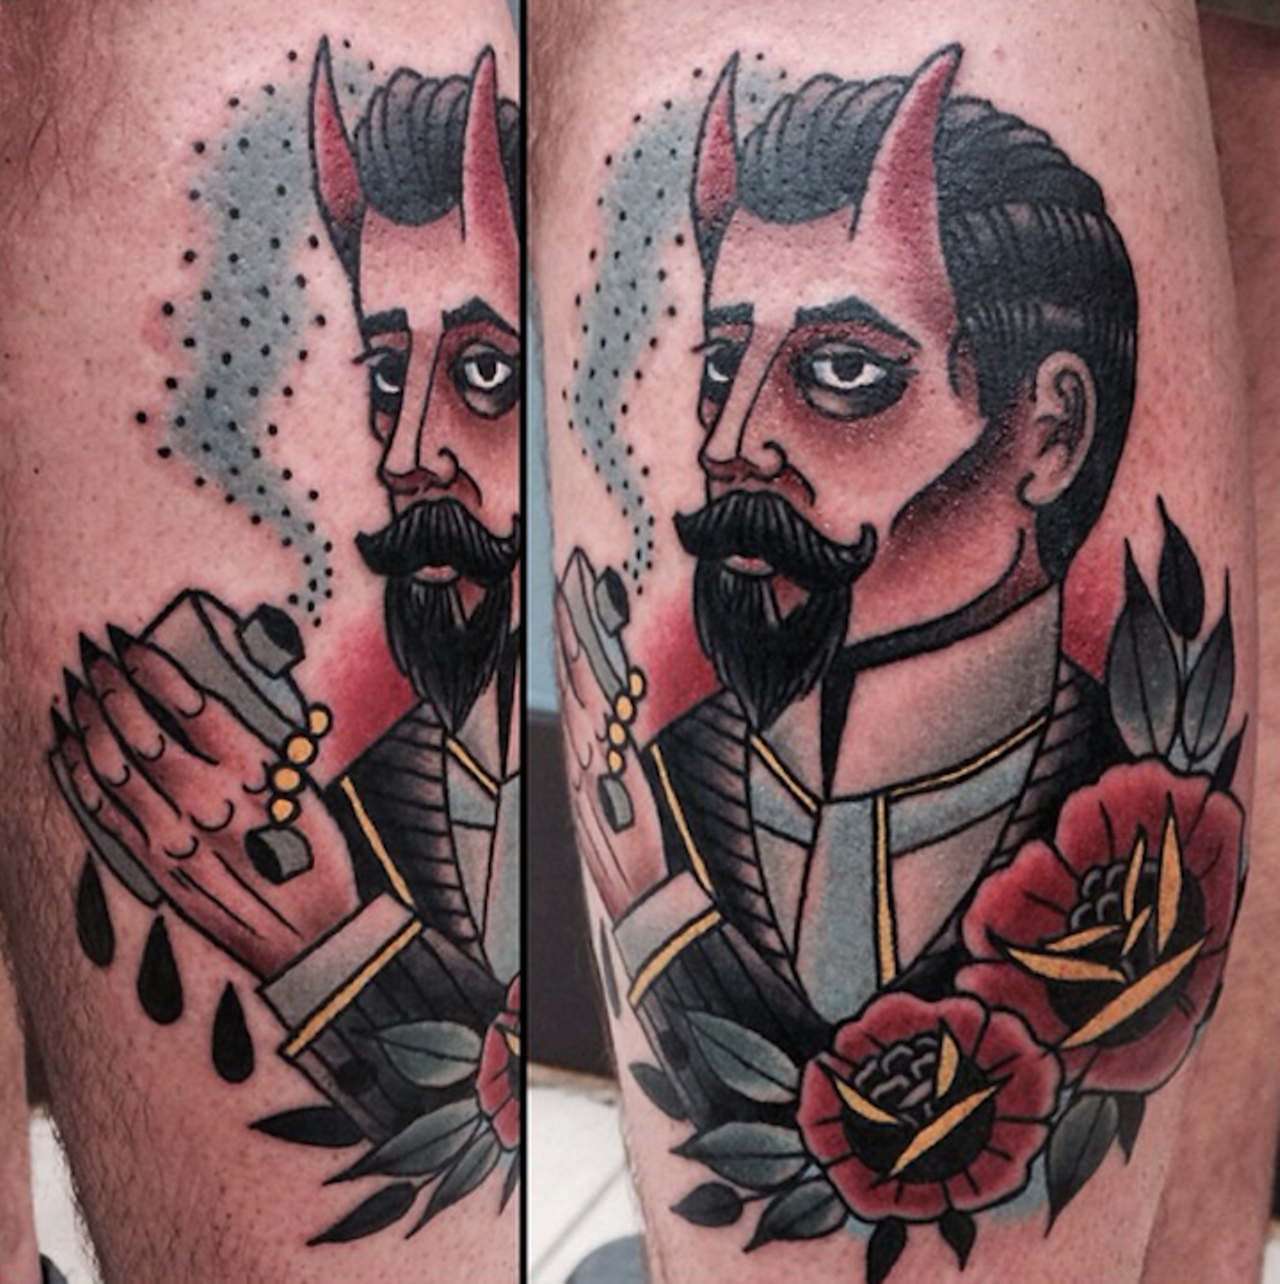 Scott White Tattoos - Thank you to the fantastic @aggie_vnek today